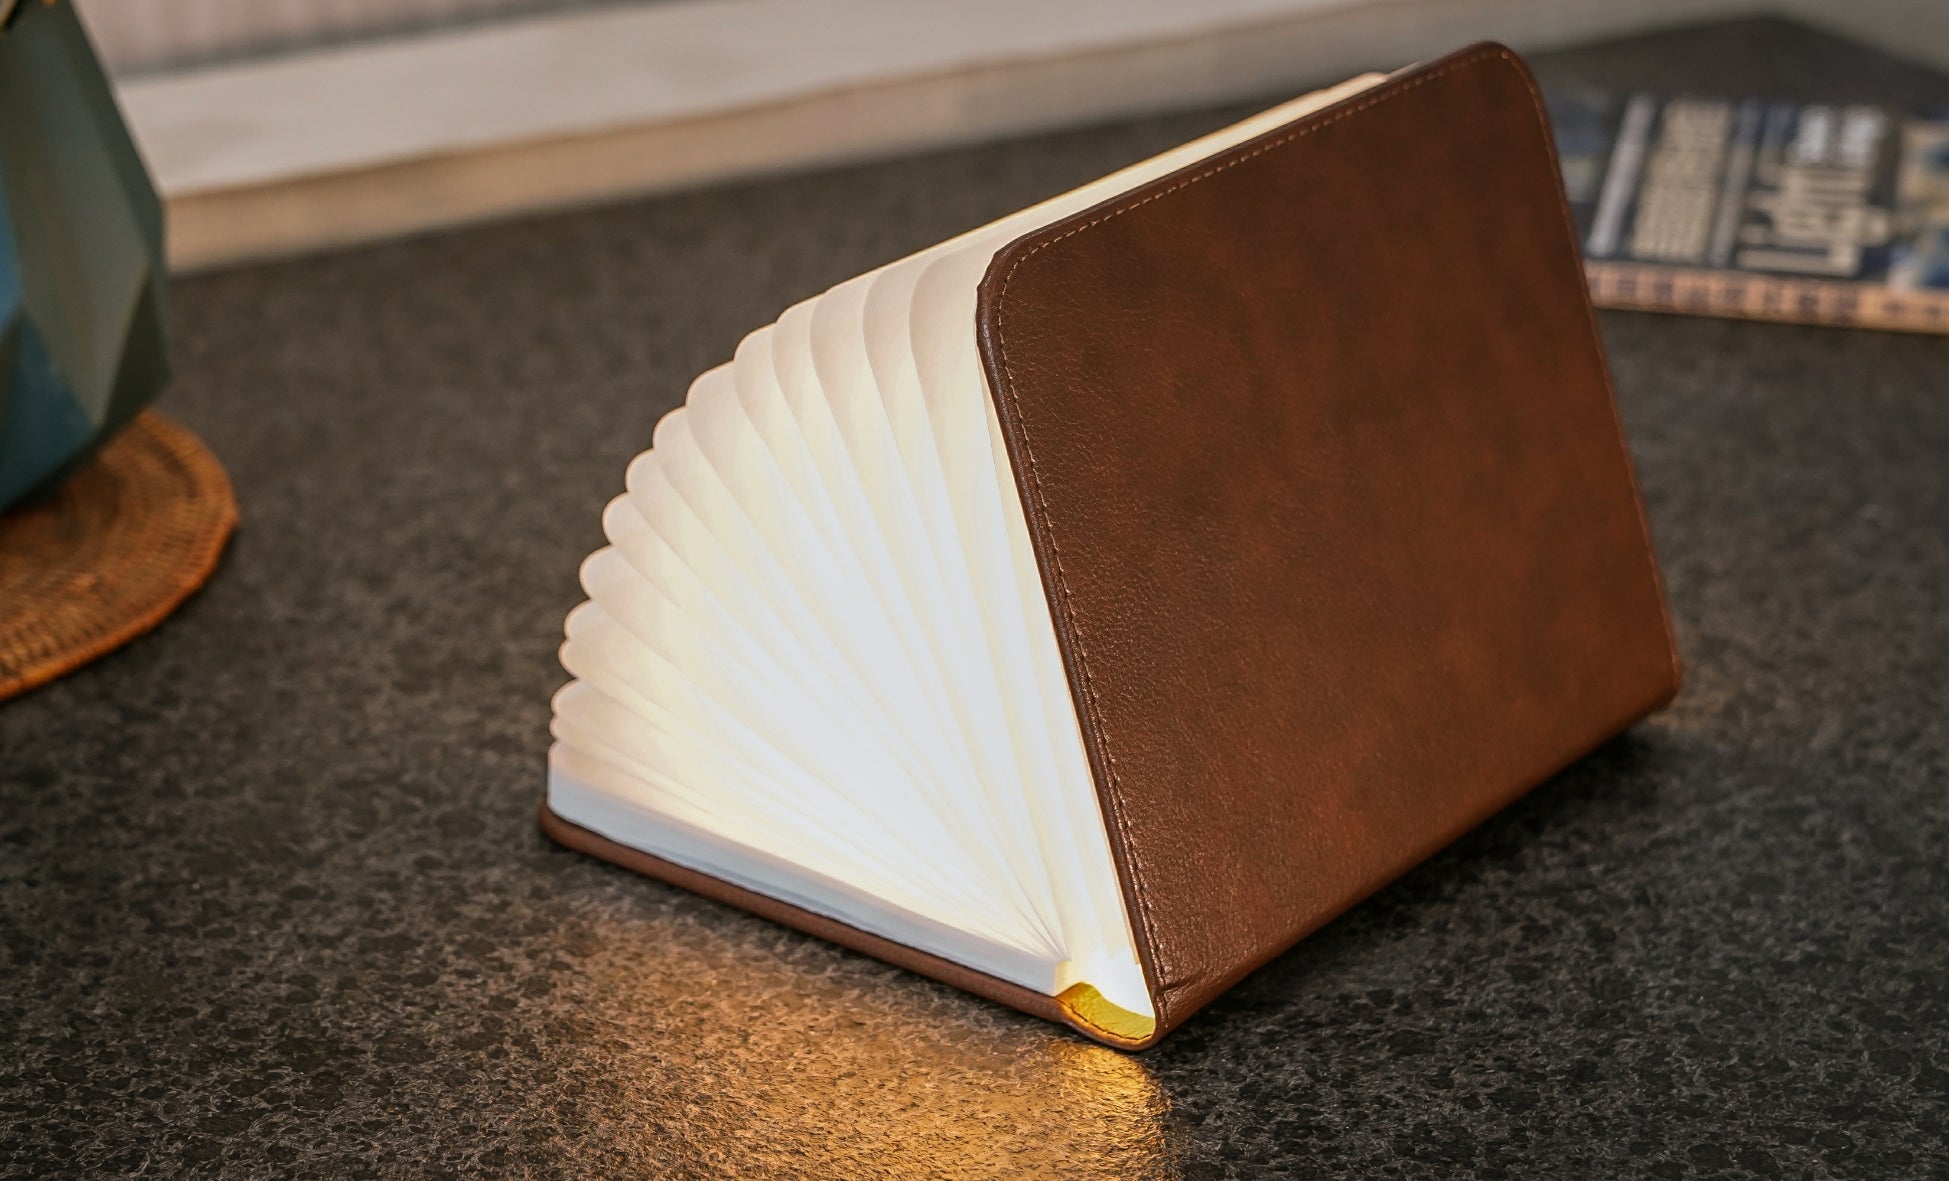 Gingko Smart Book Light  - Brown Leather